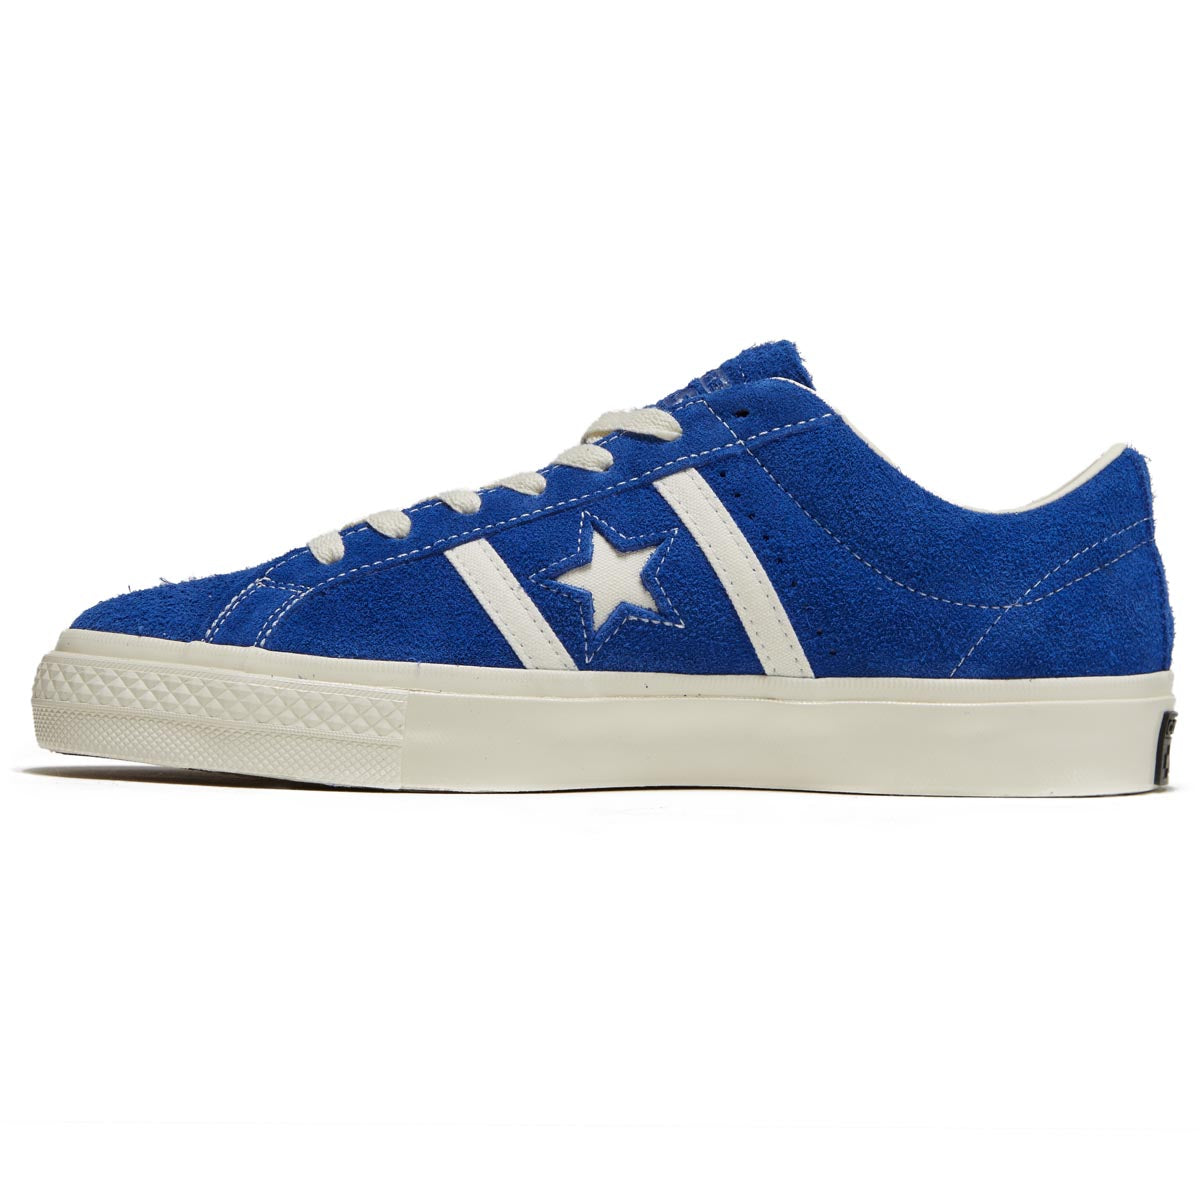 Converse One Star Academy Pro Shoes - Blue/Egret/Egret image 2